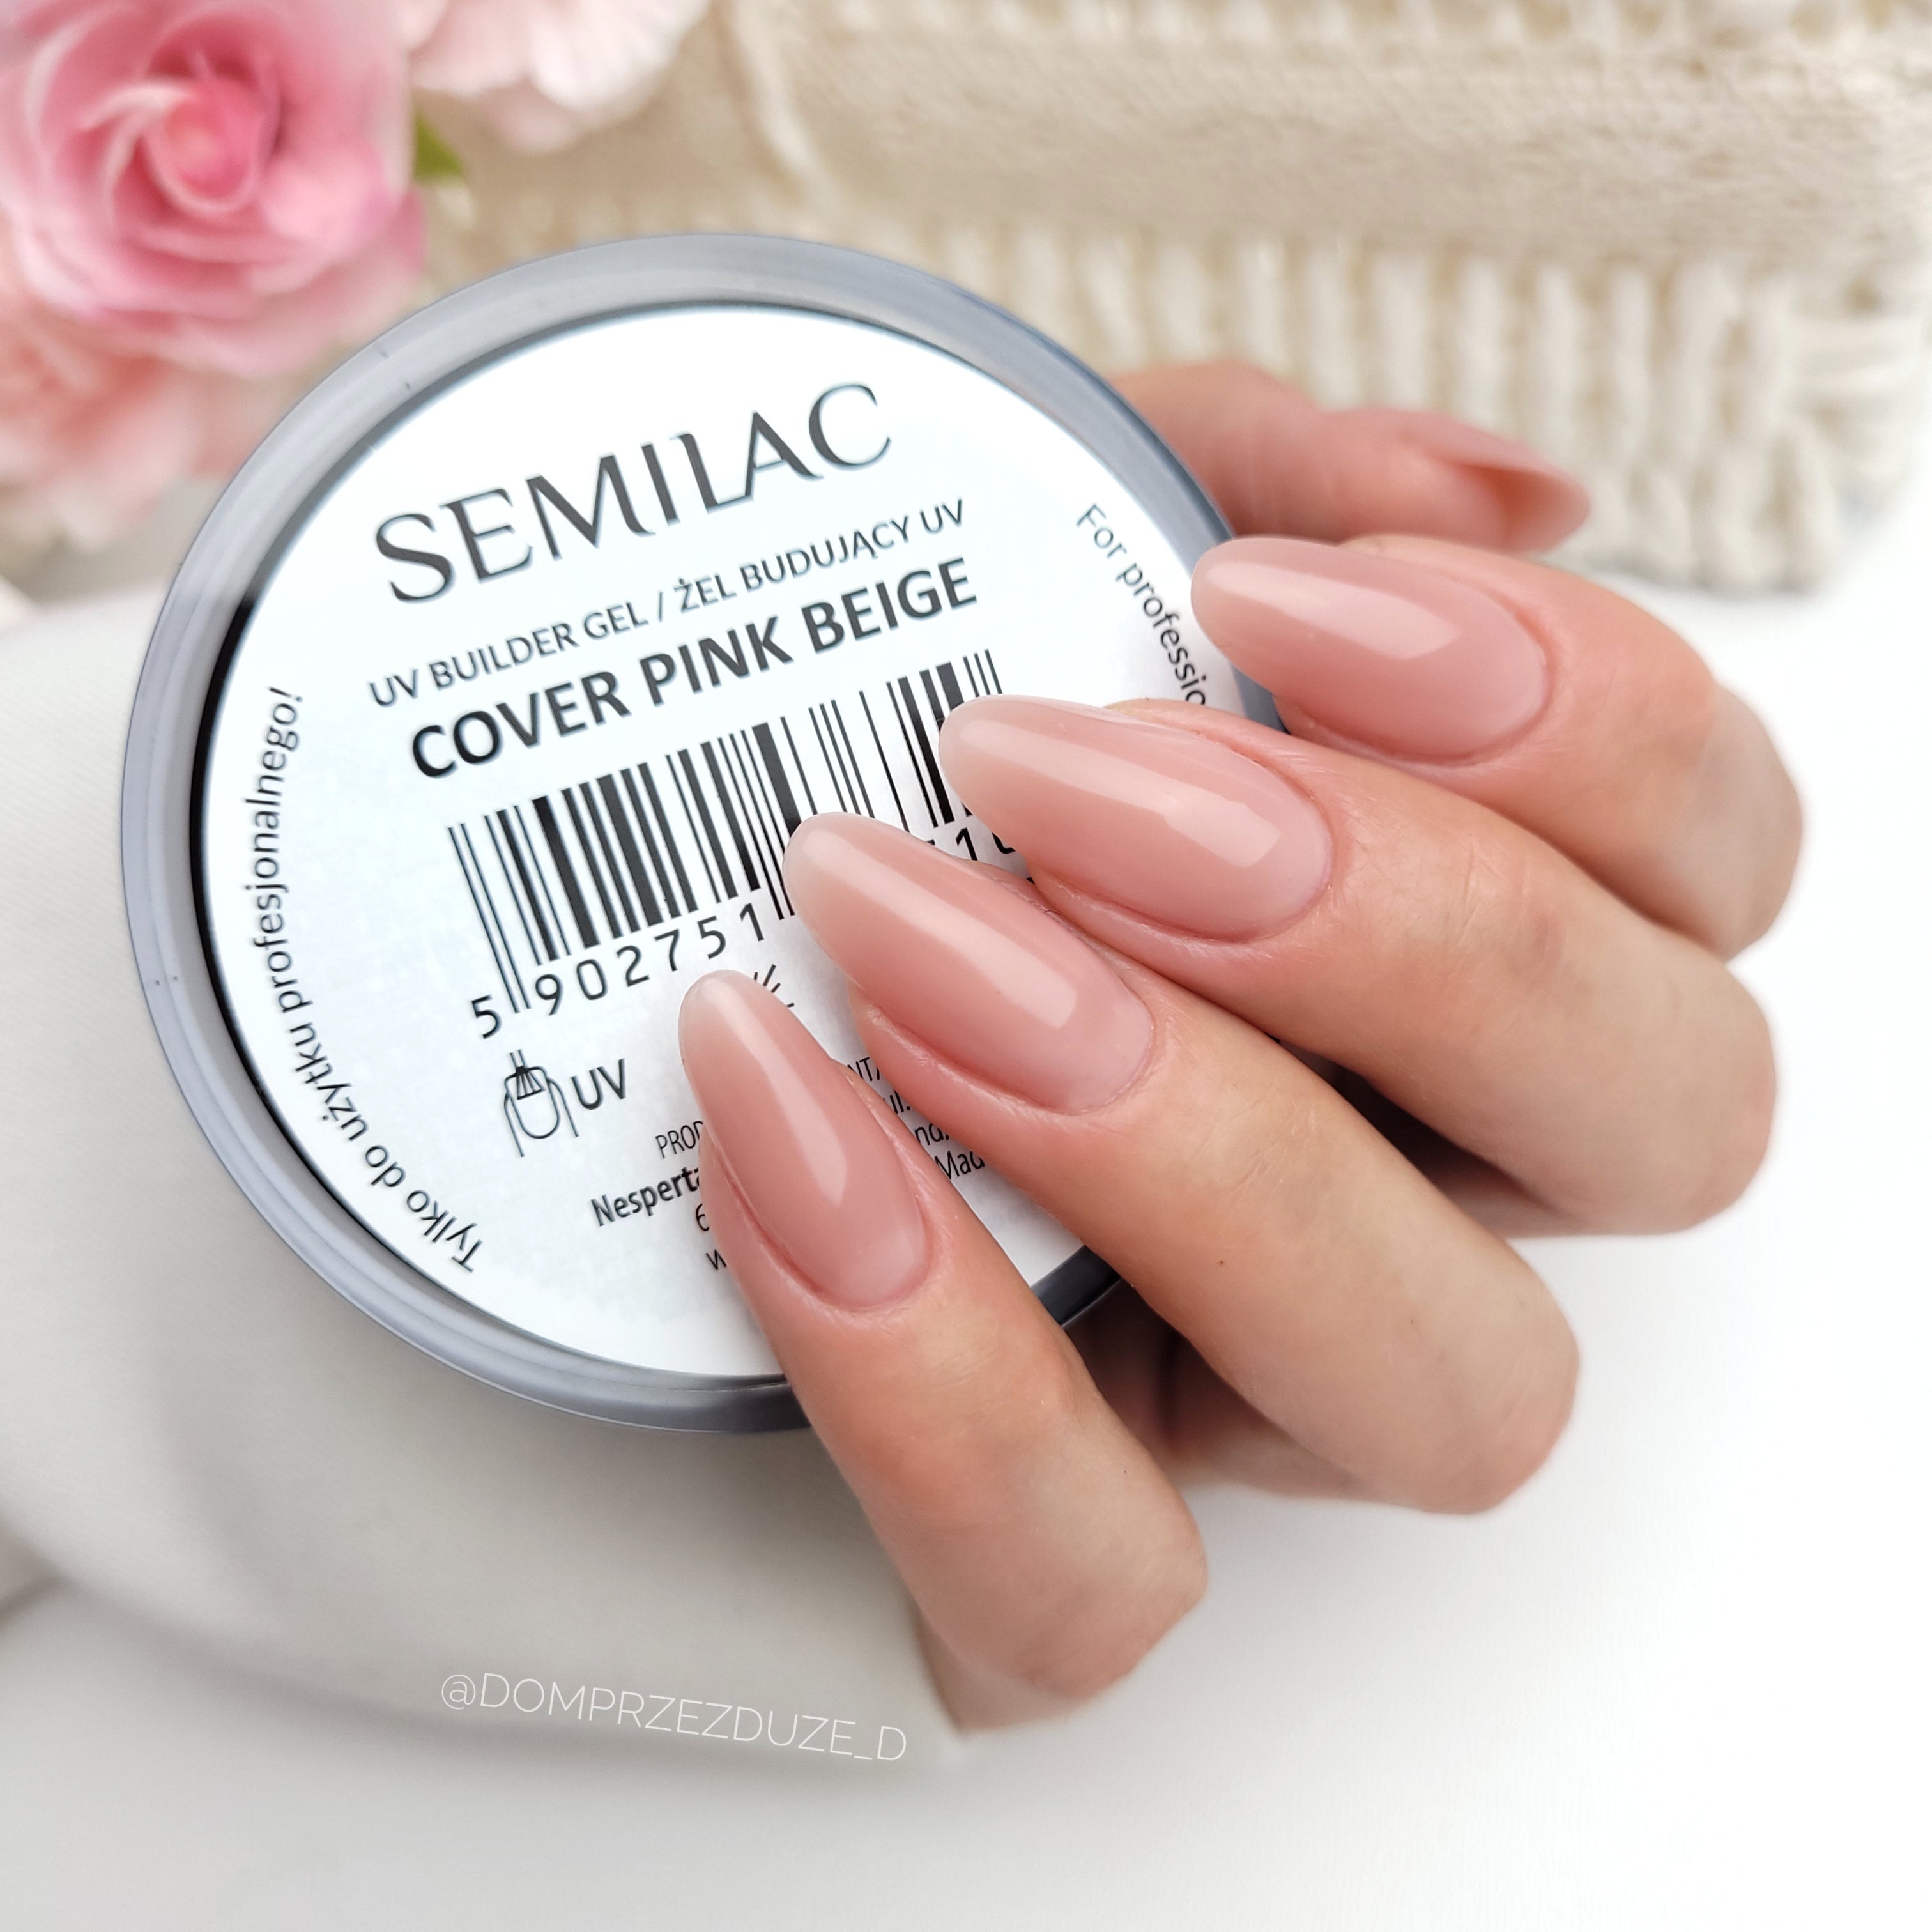 Semilac Builder Gel Cover Pink Beige 15g - Semilac UK